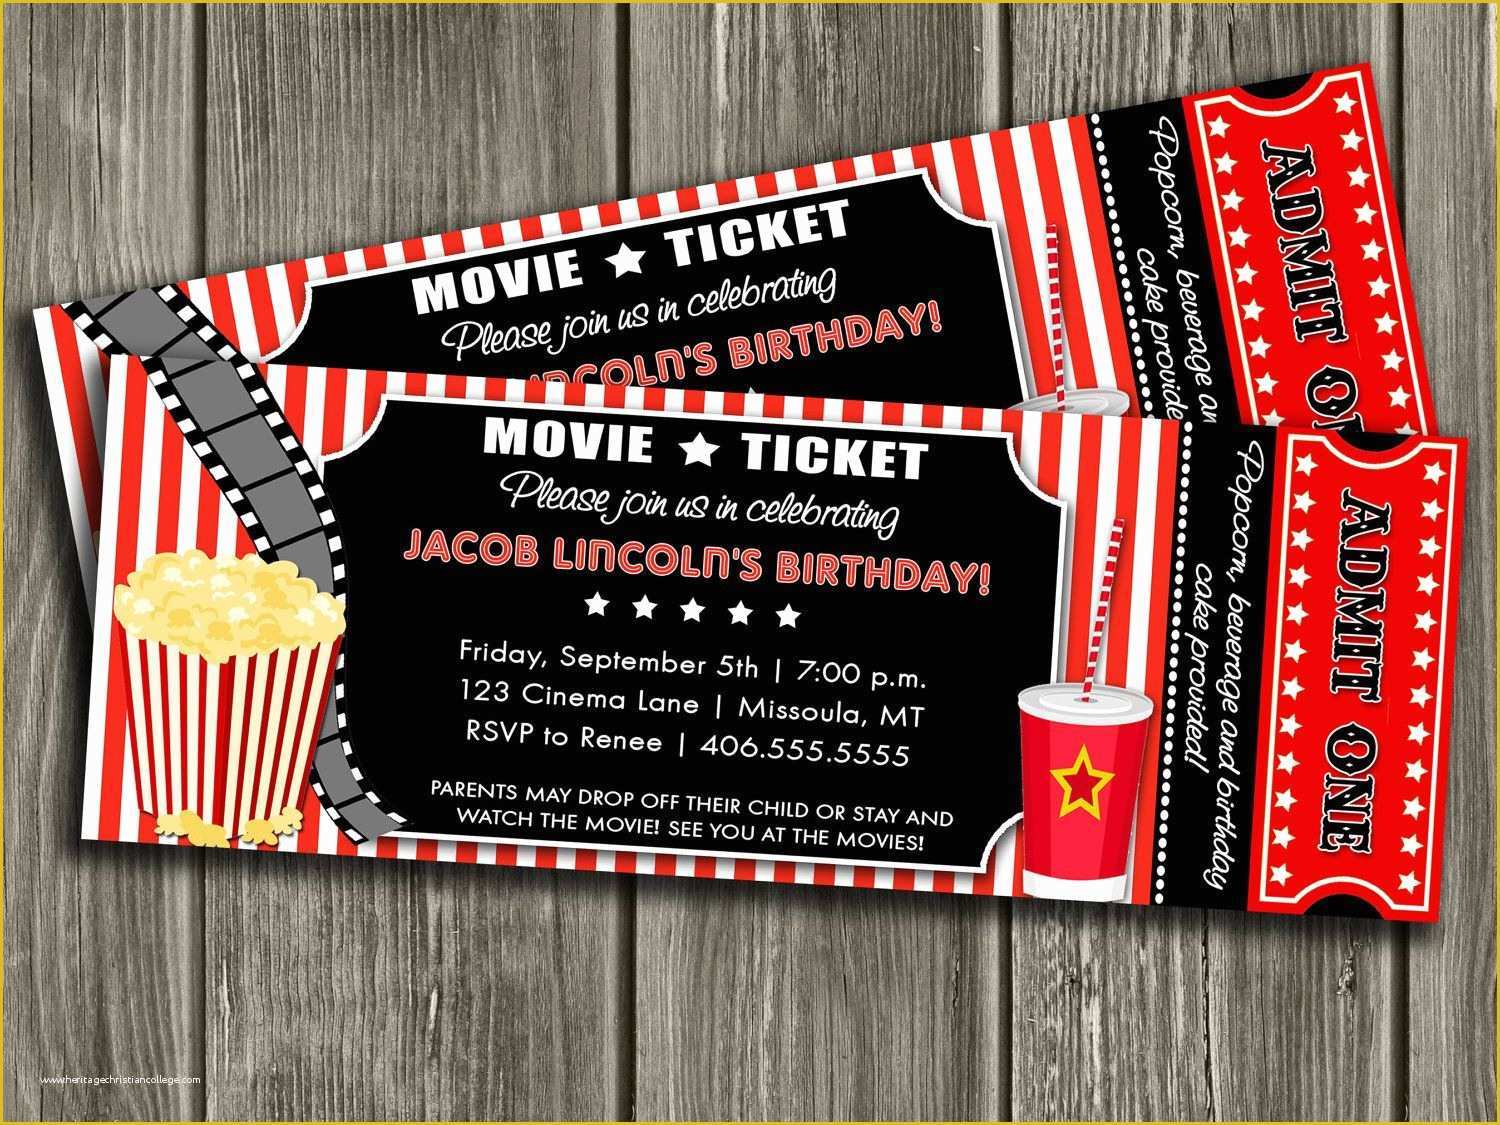 Movie Ticket Invitation Template Free Of Movie Ticket Invitation Free Thank You Card Included